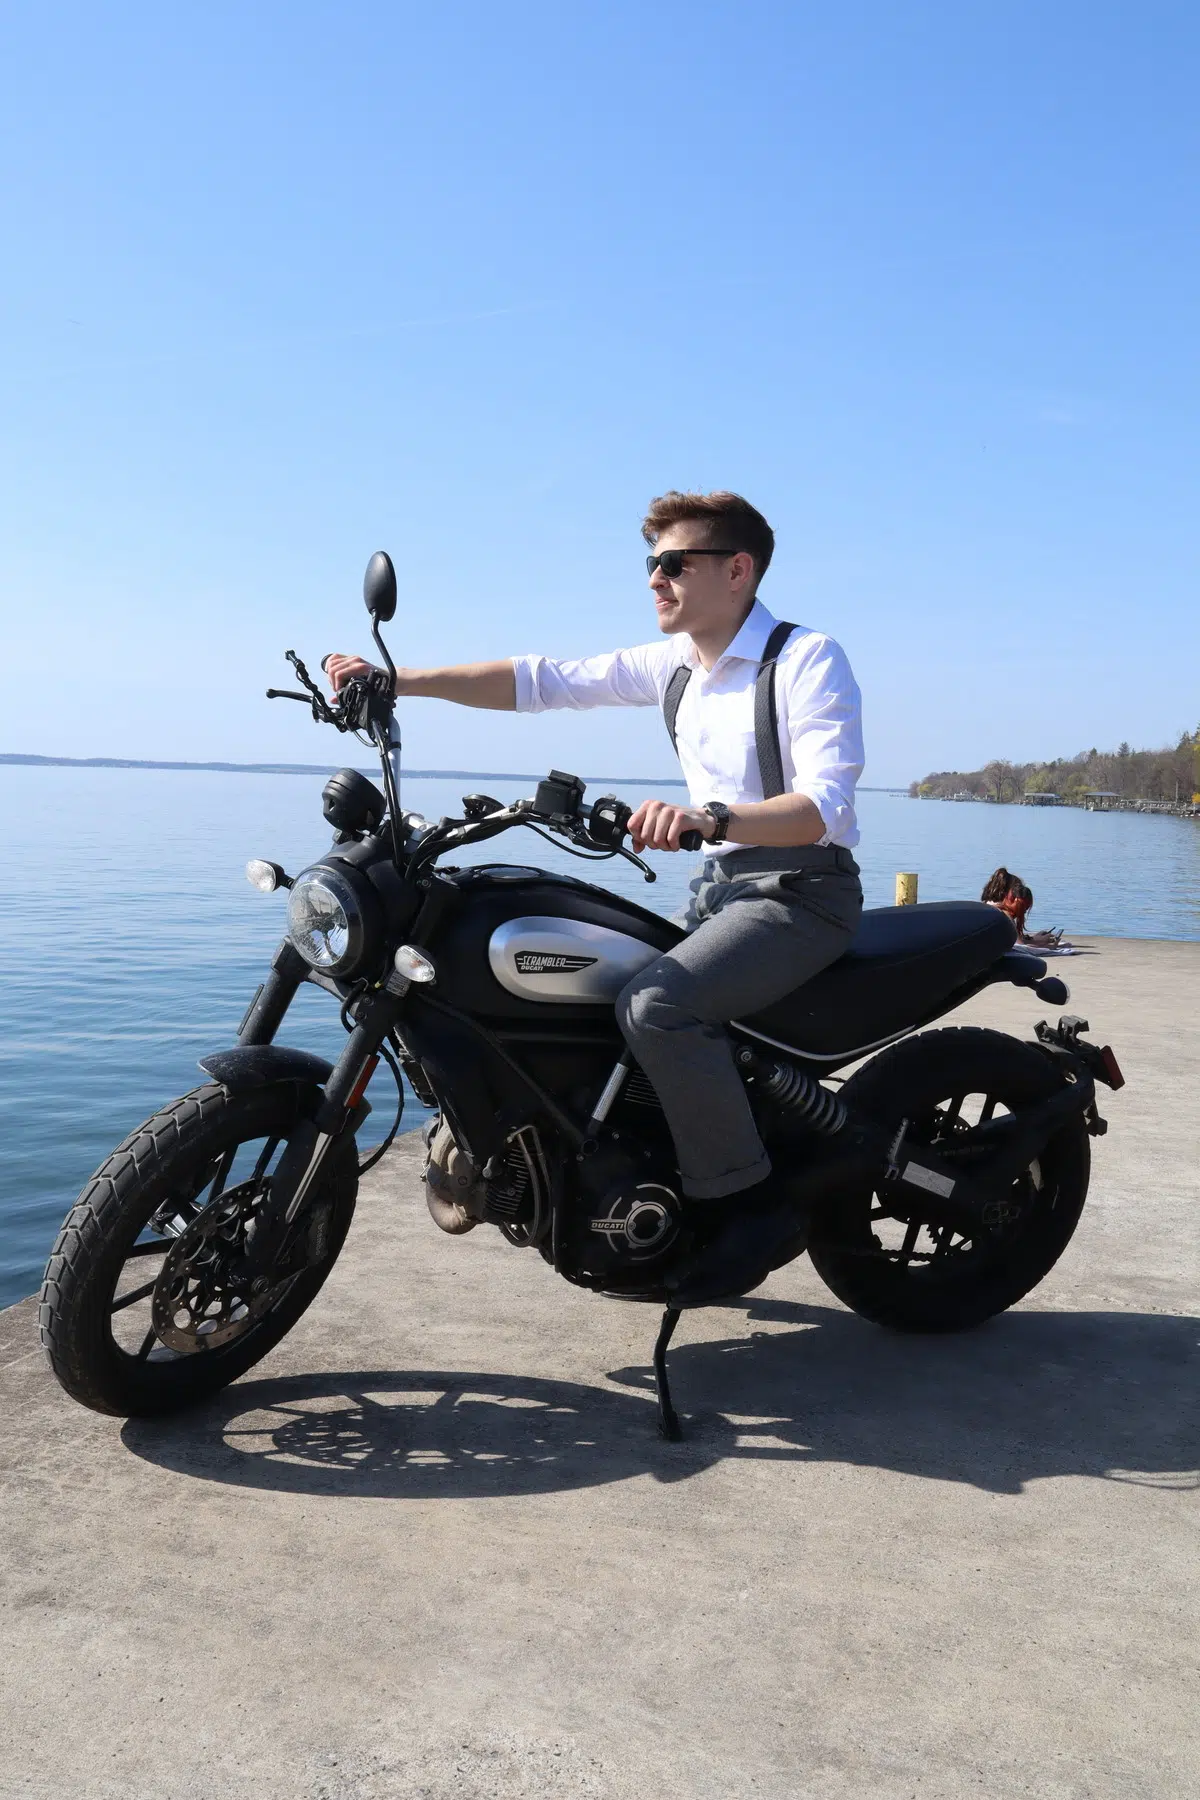 Ryan on motorcycle